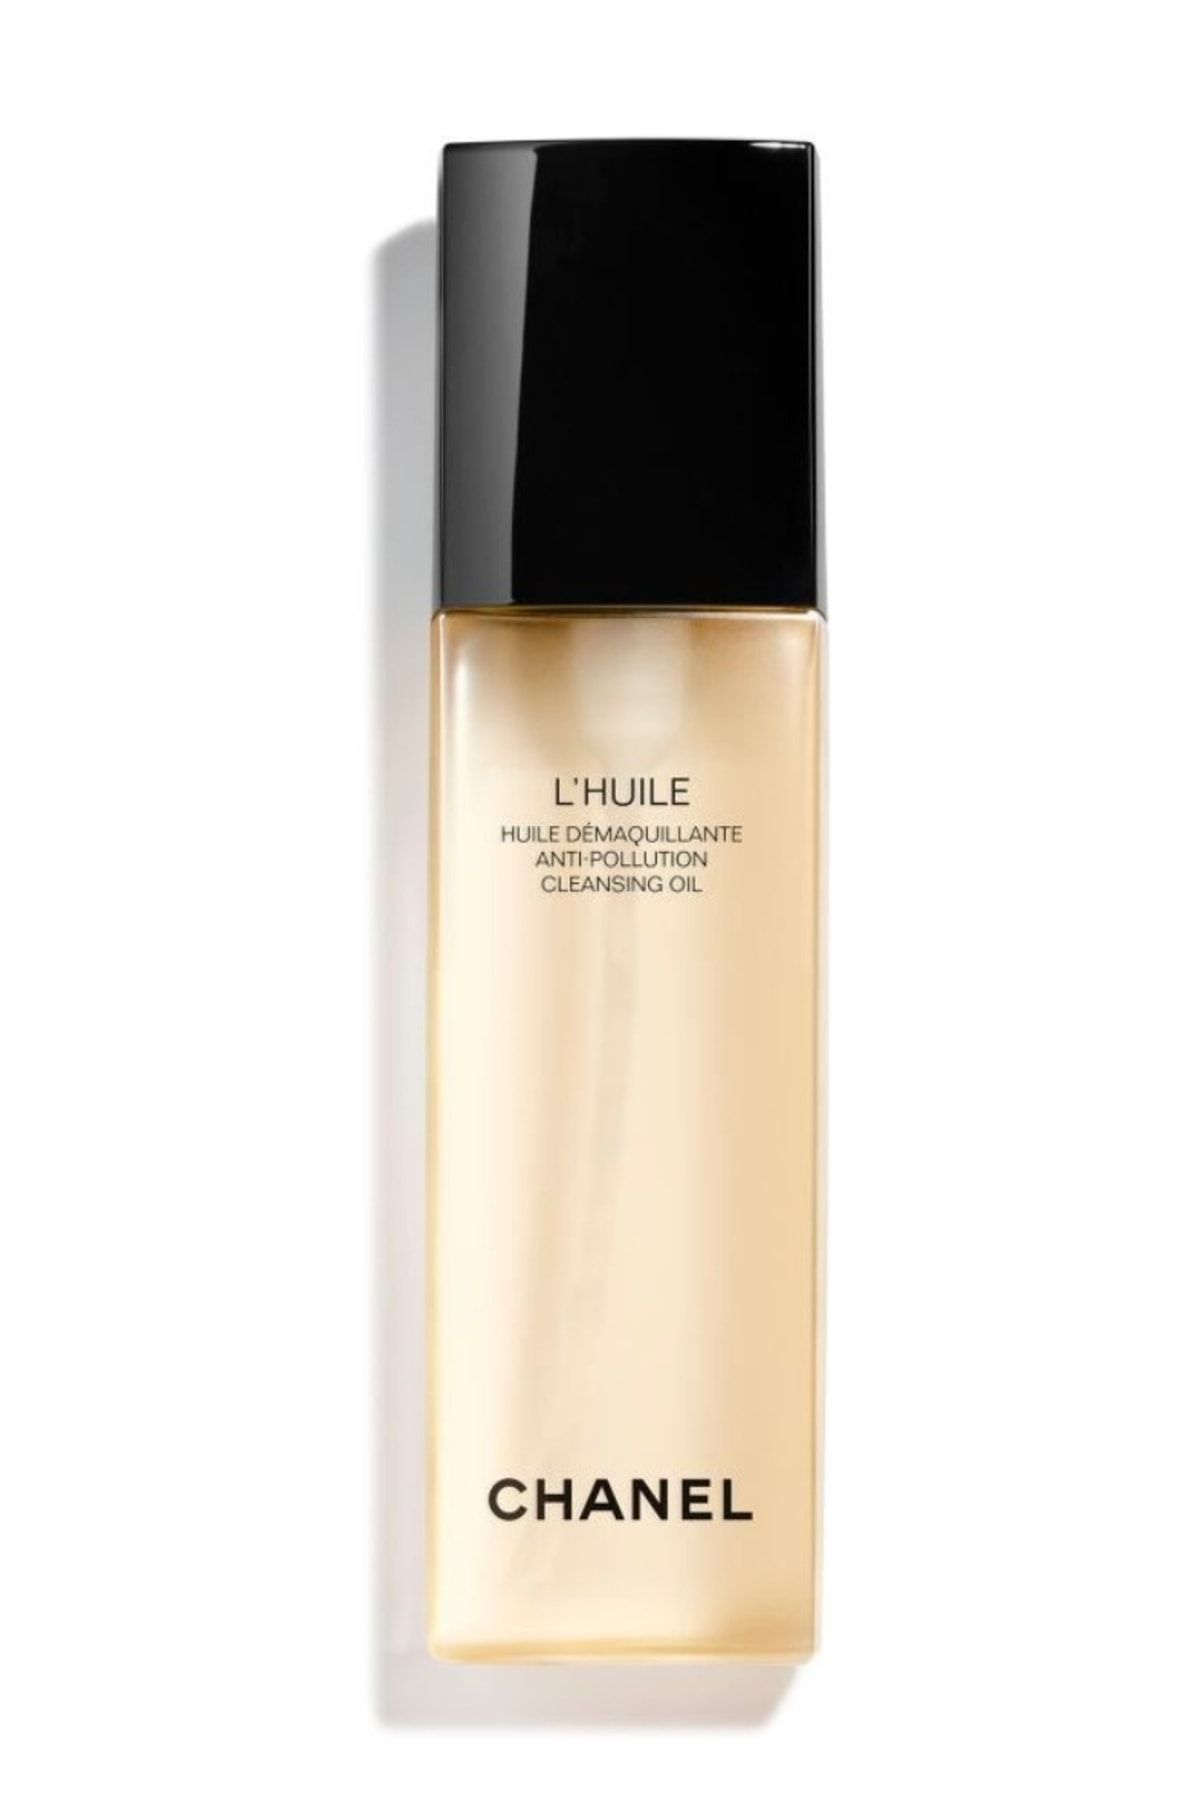 Chanel روغن پاک کننده آرایش L’huile حفظ و تقویت سد دفاعی پوست 150میل